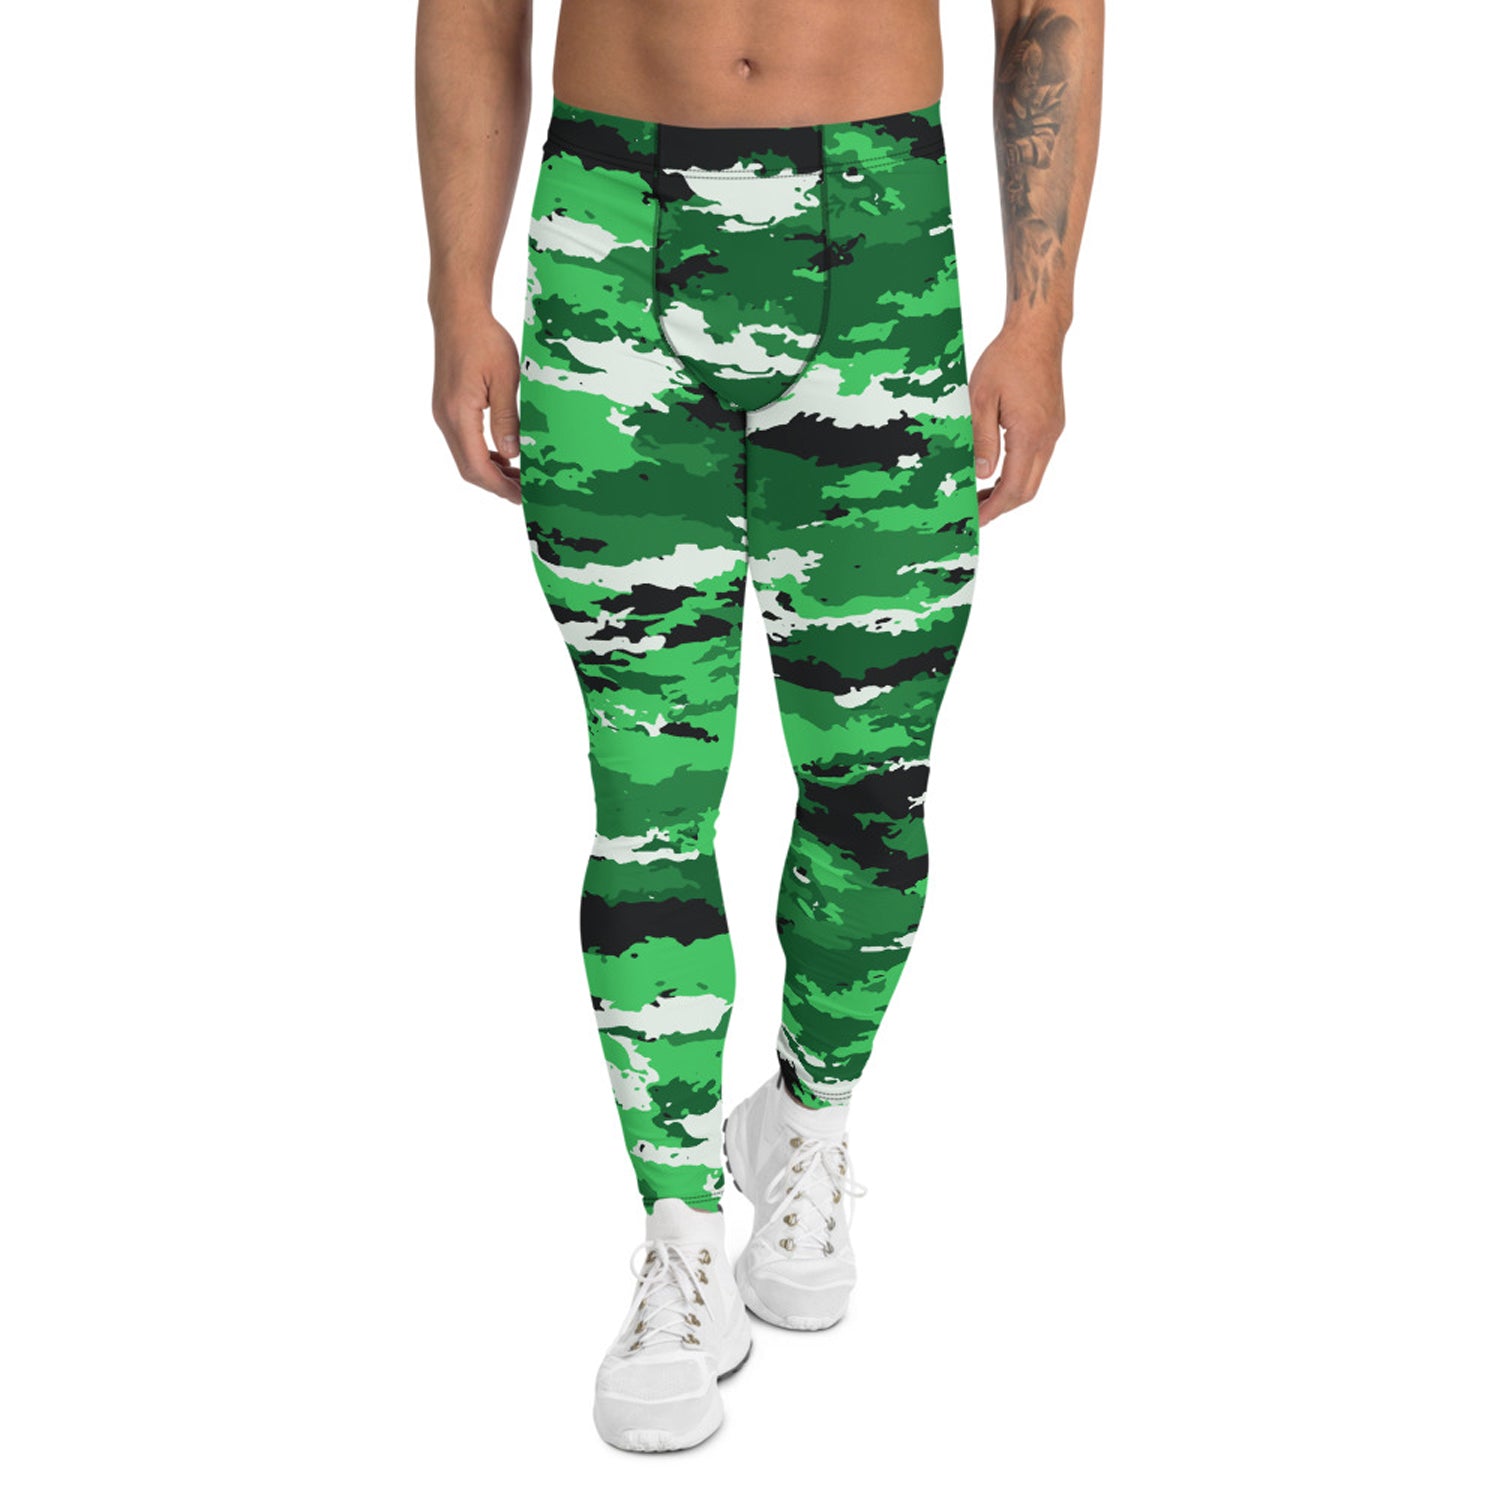 Men's green camo leggings